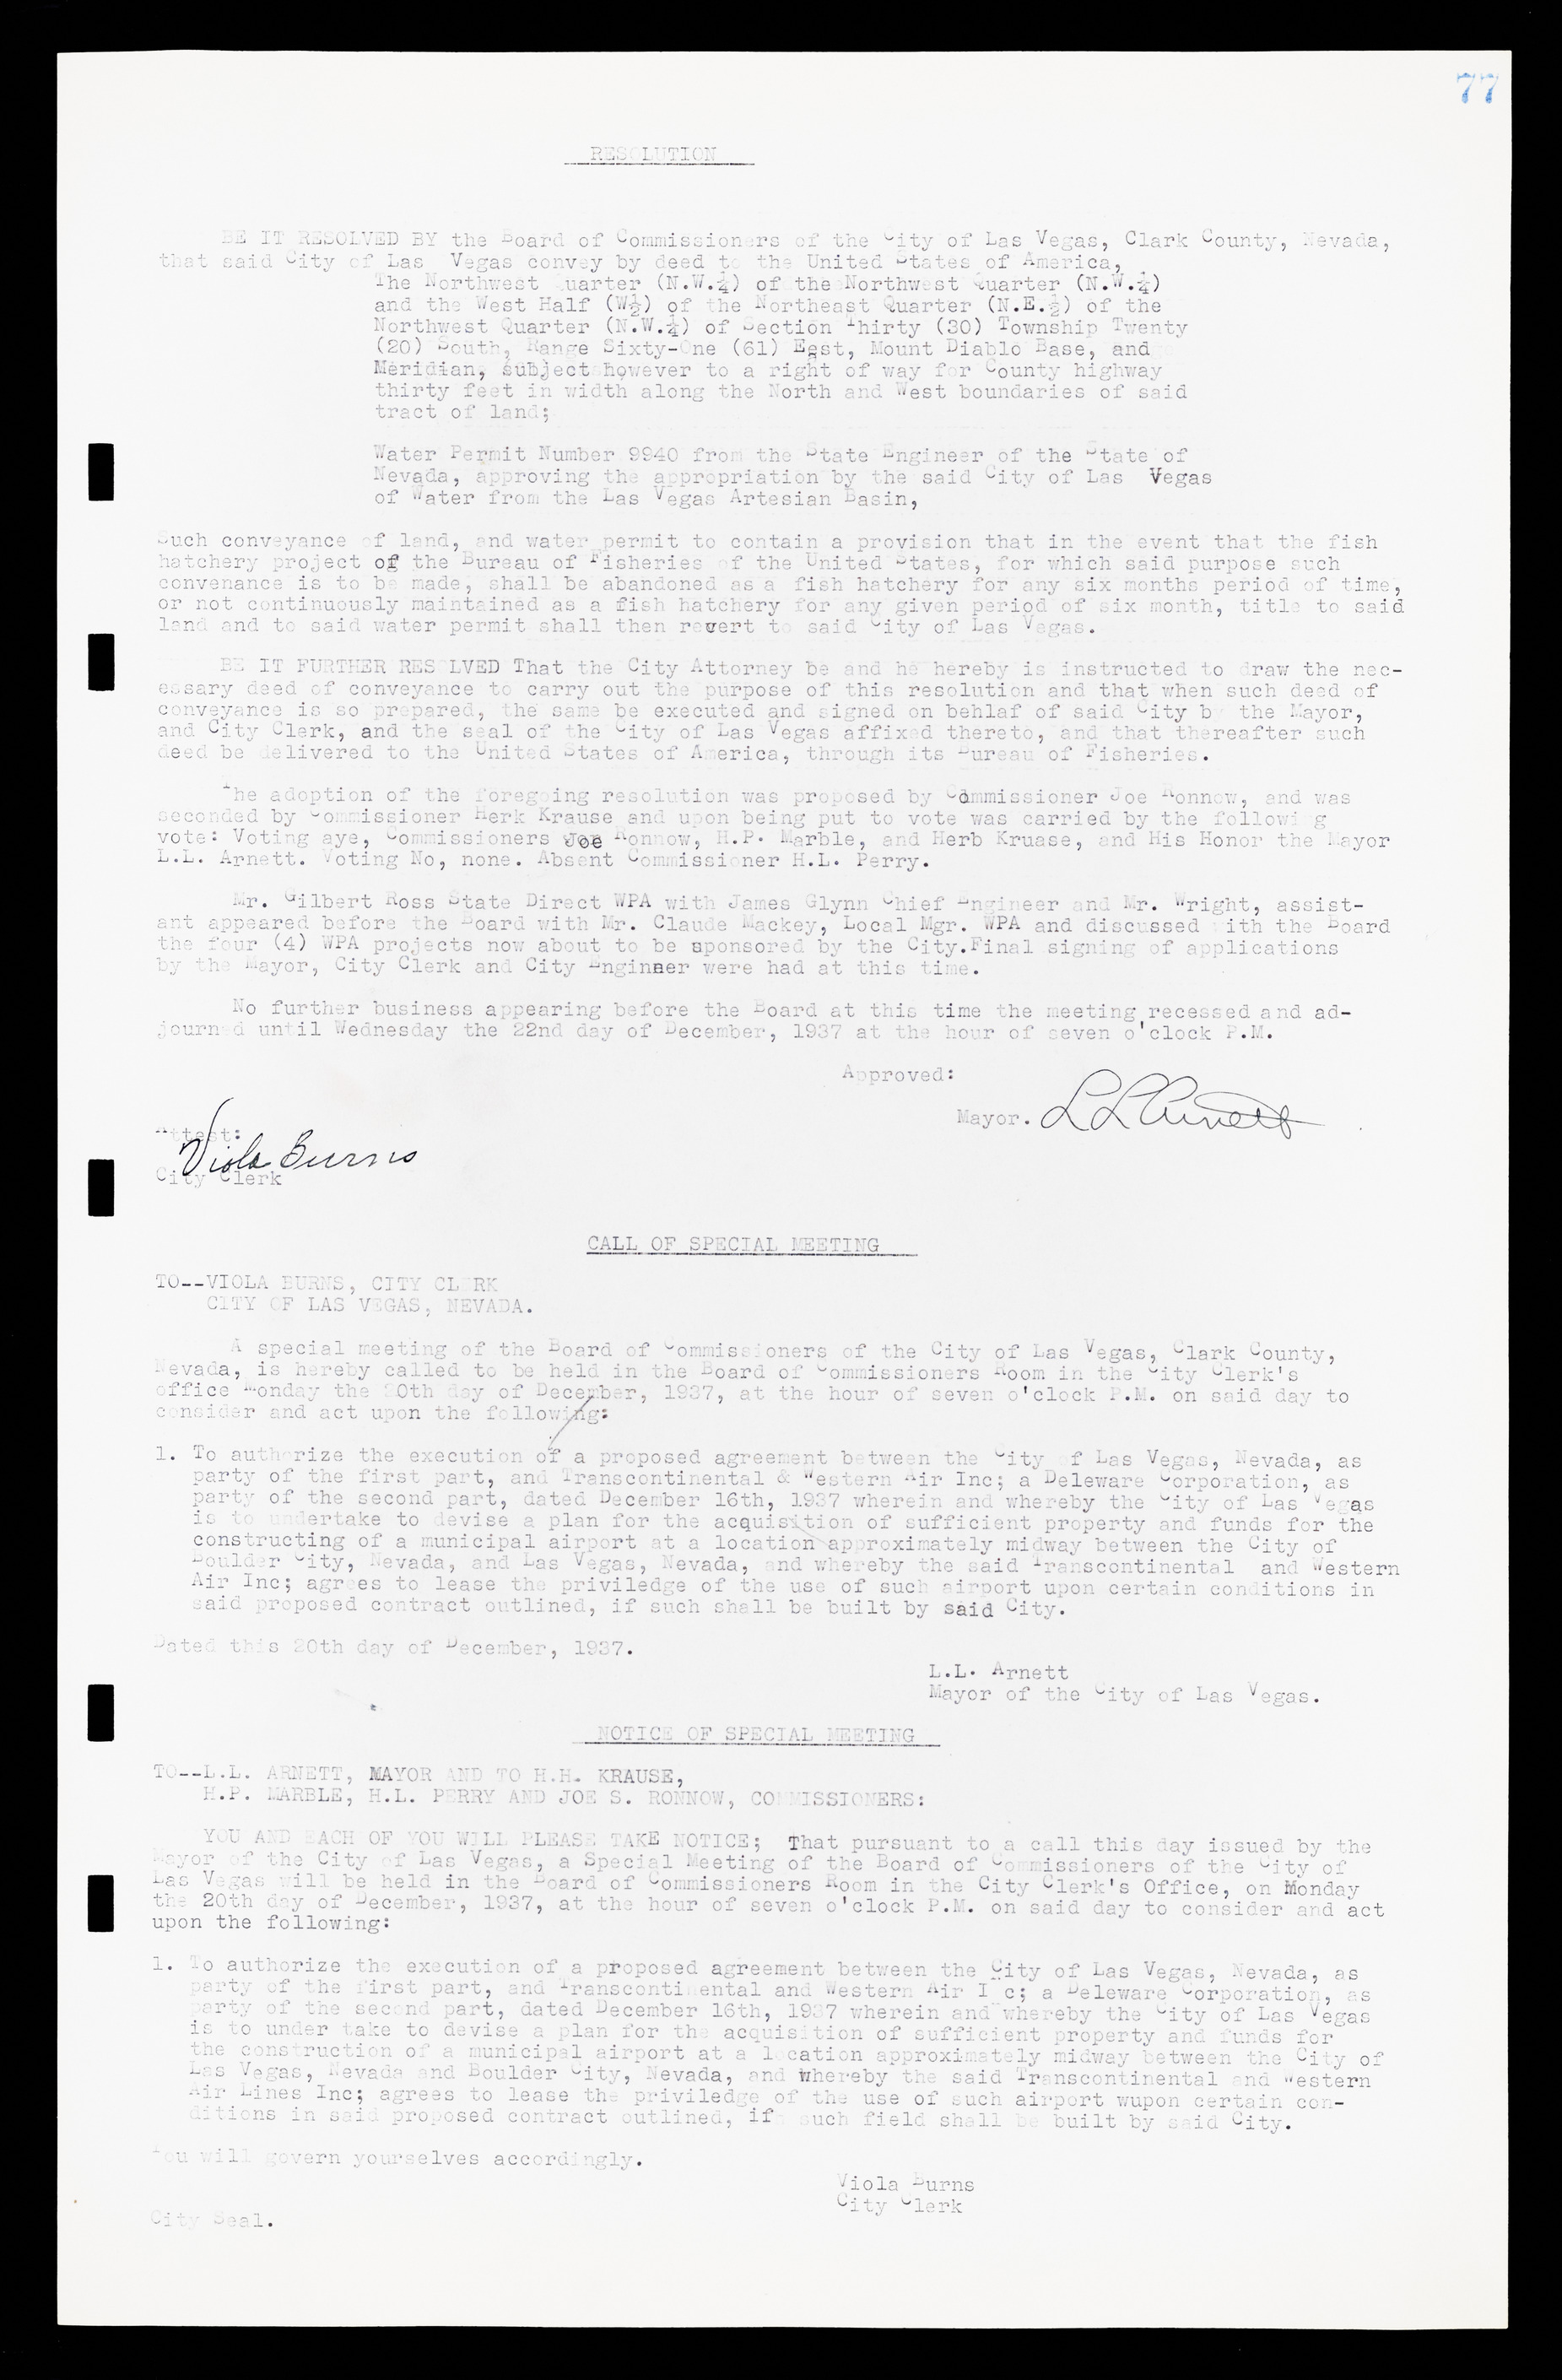 Las Vegas City Commission Minutes, February 17, 1937 to August 4, 1942, lvc000004-86